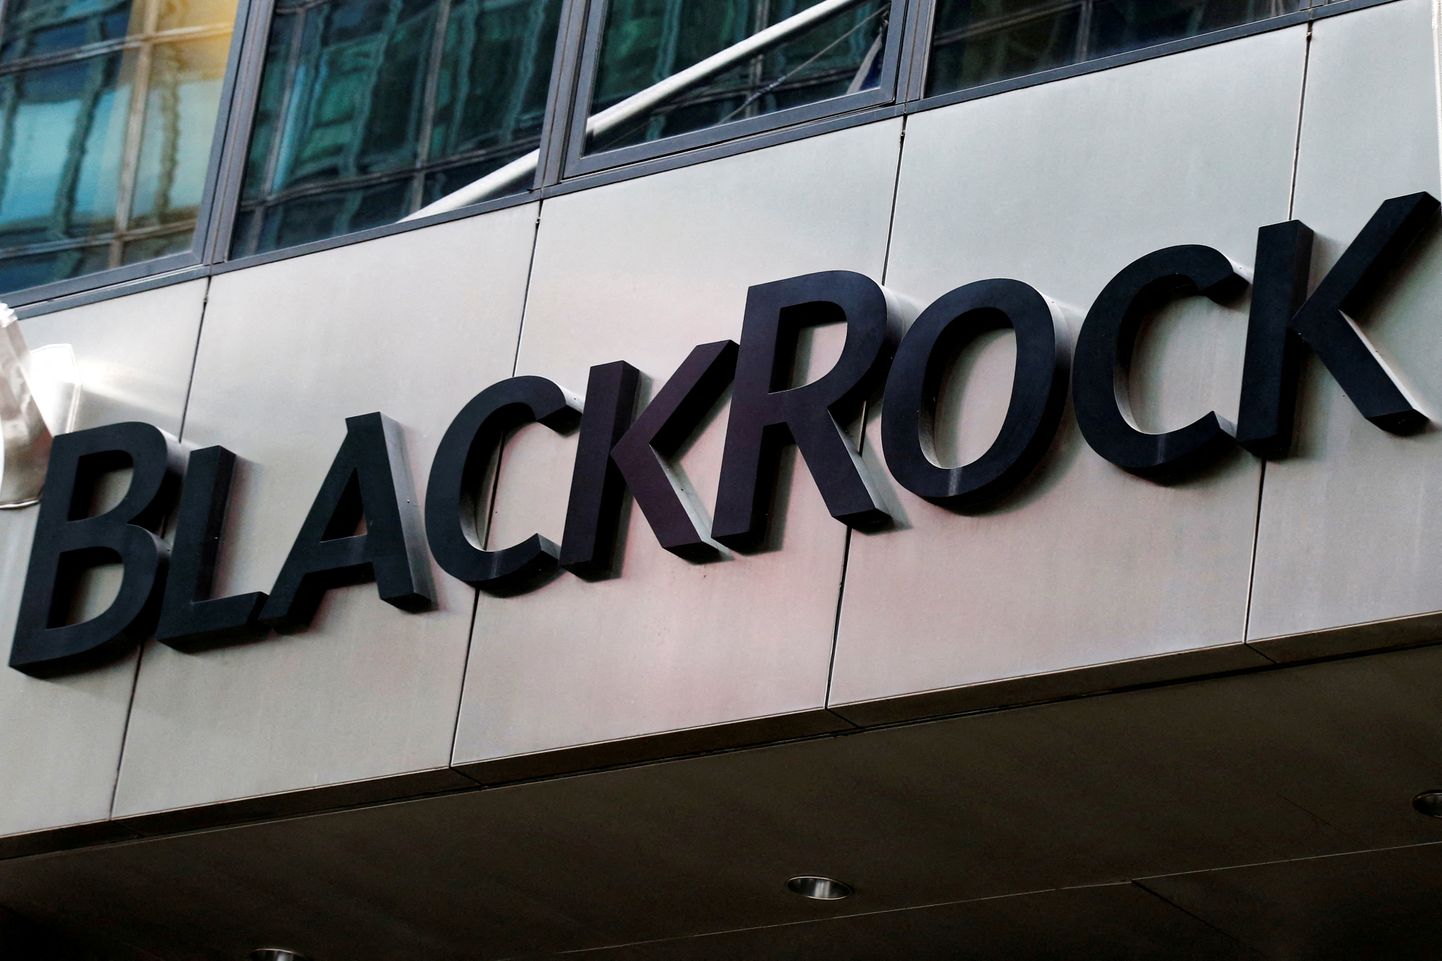 Blackrocki logo